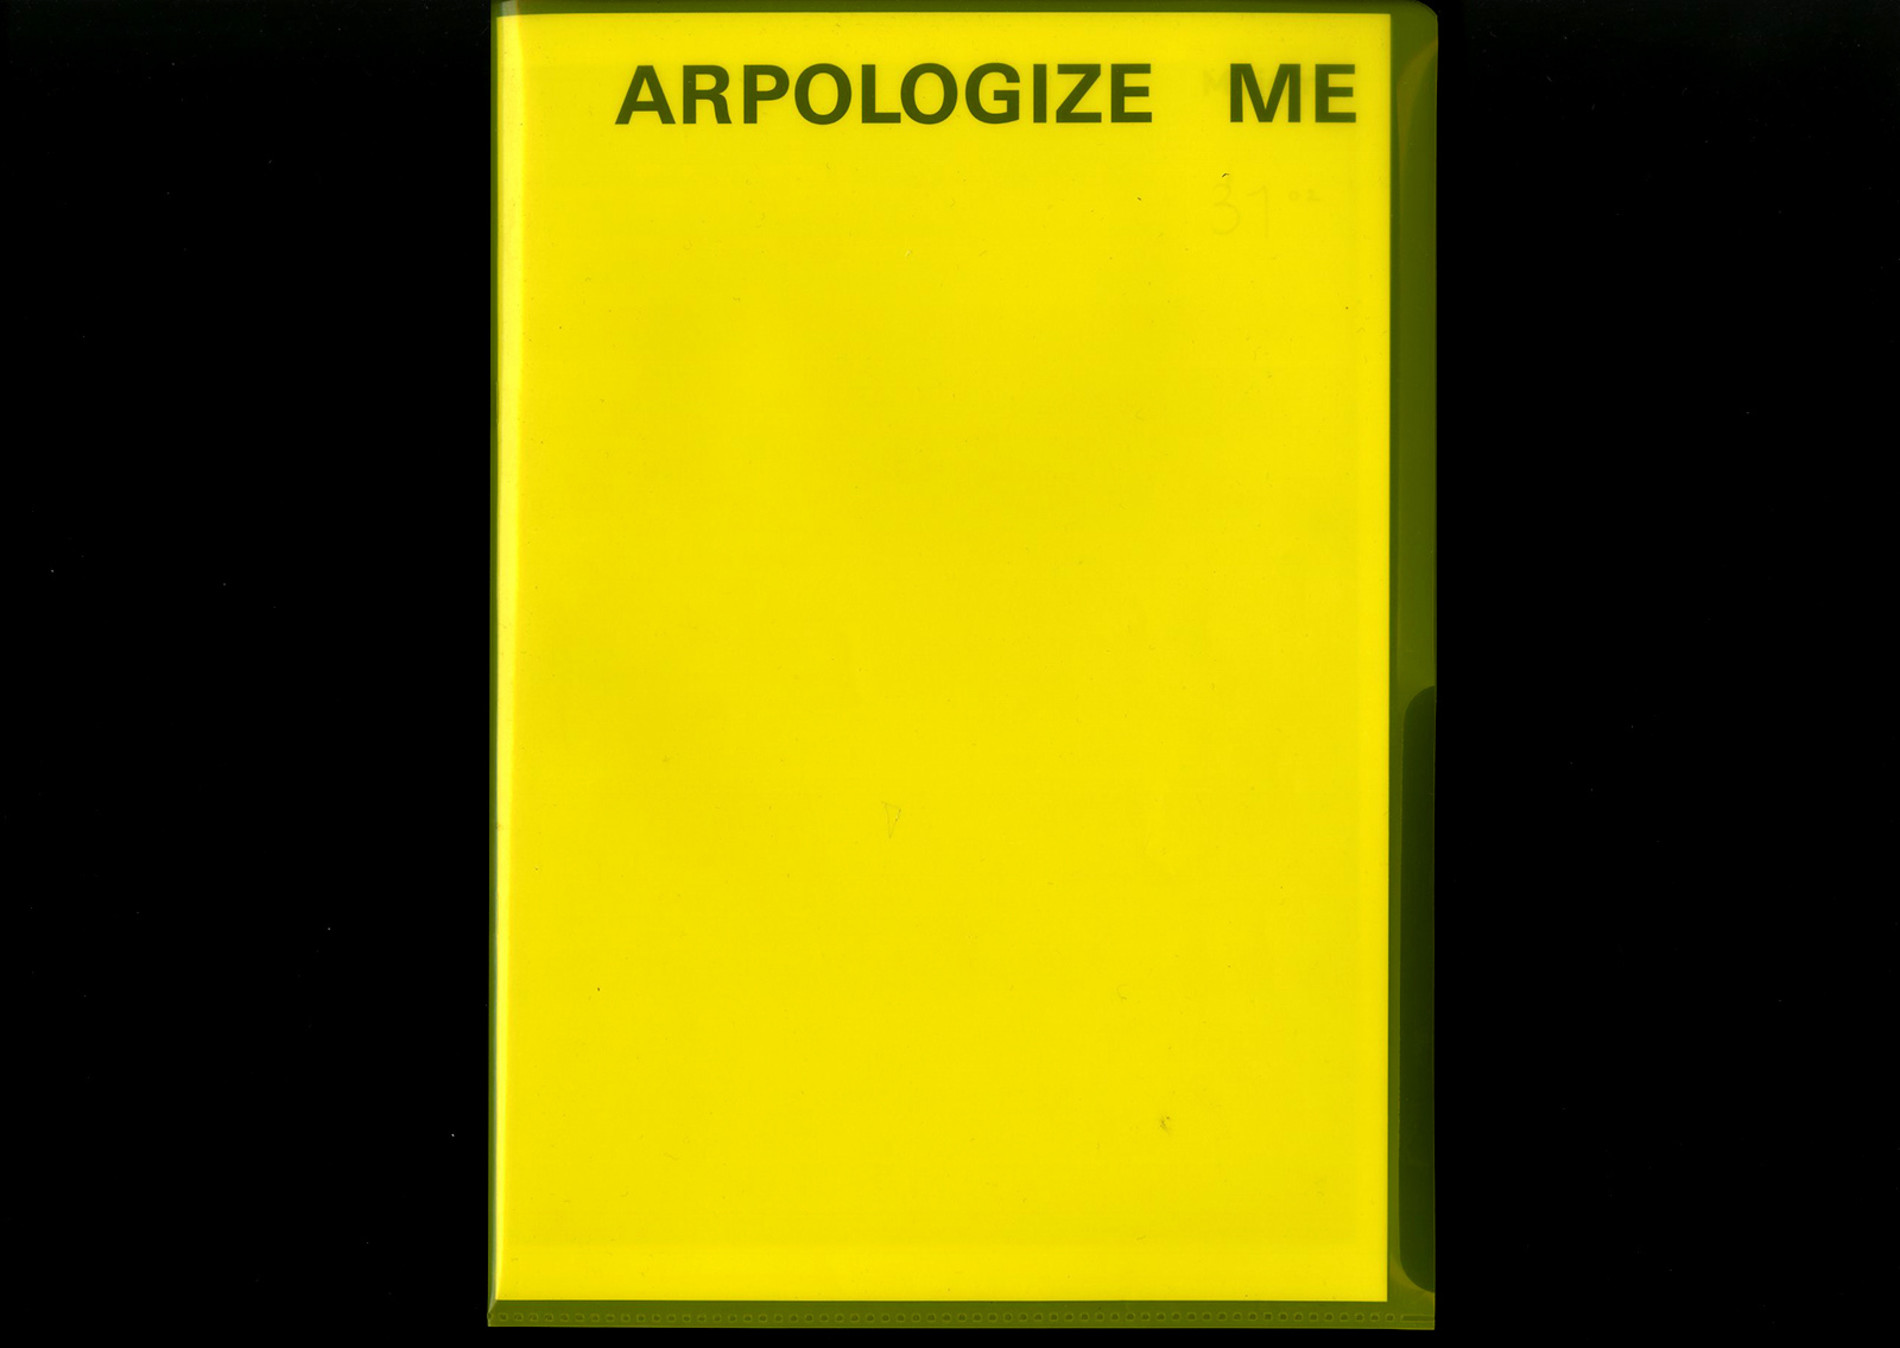 backbonebooks Arpologize Me